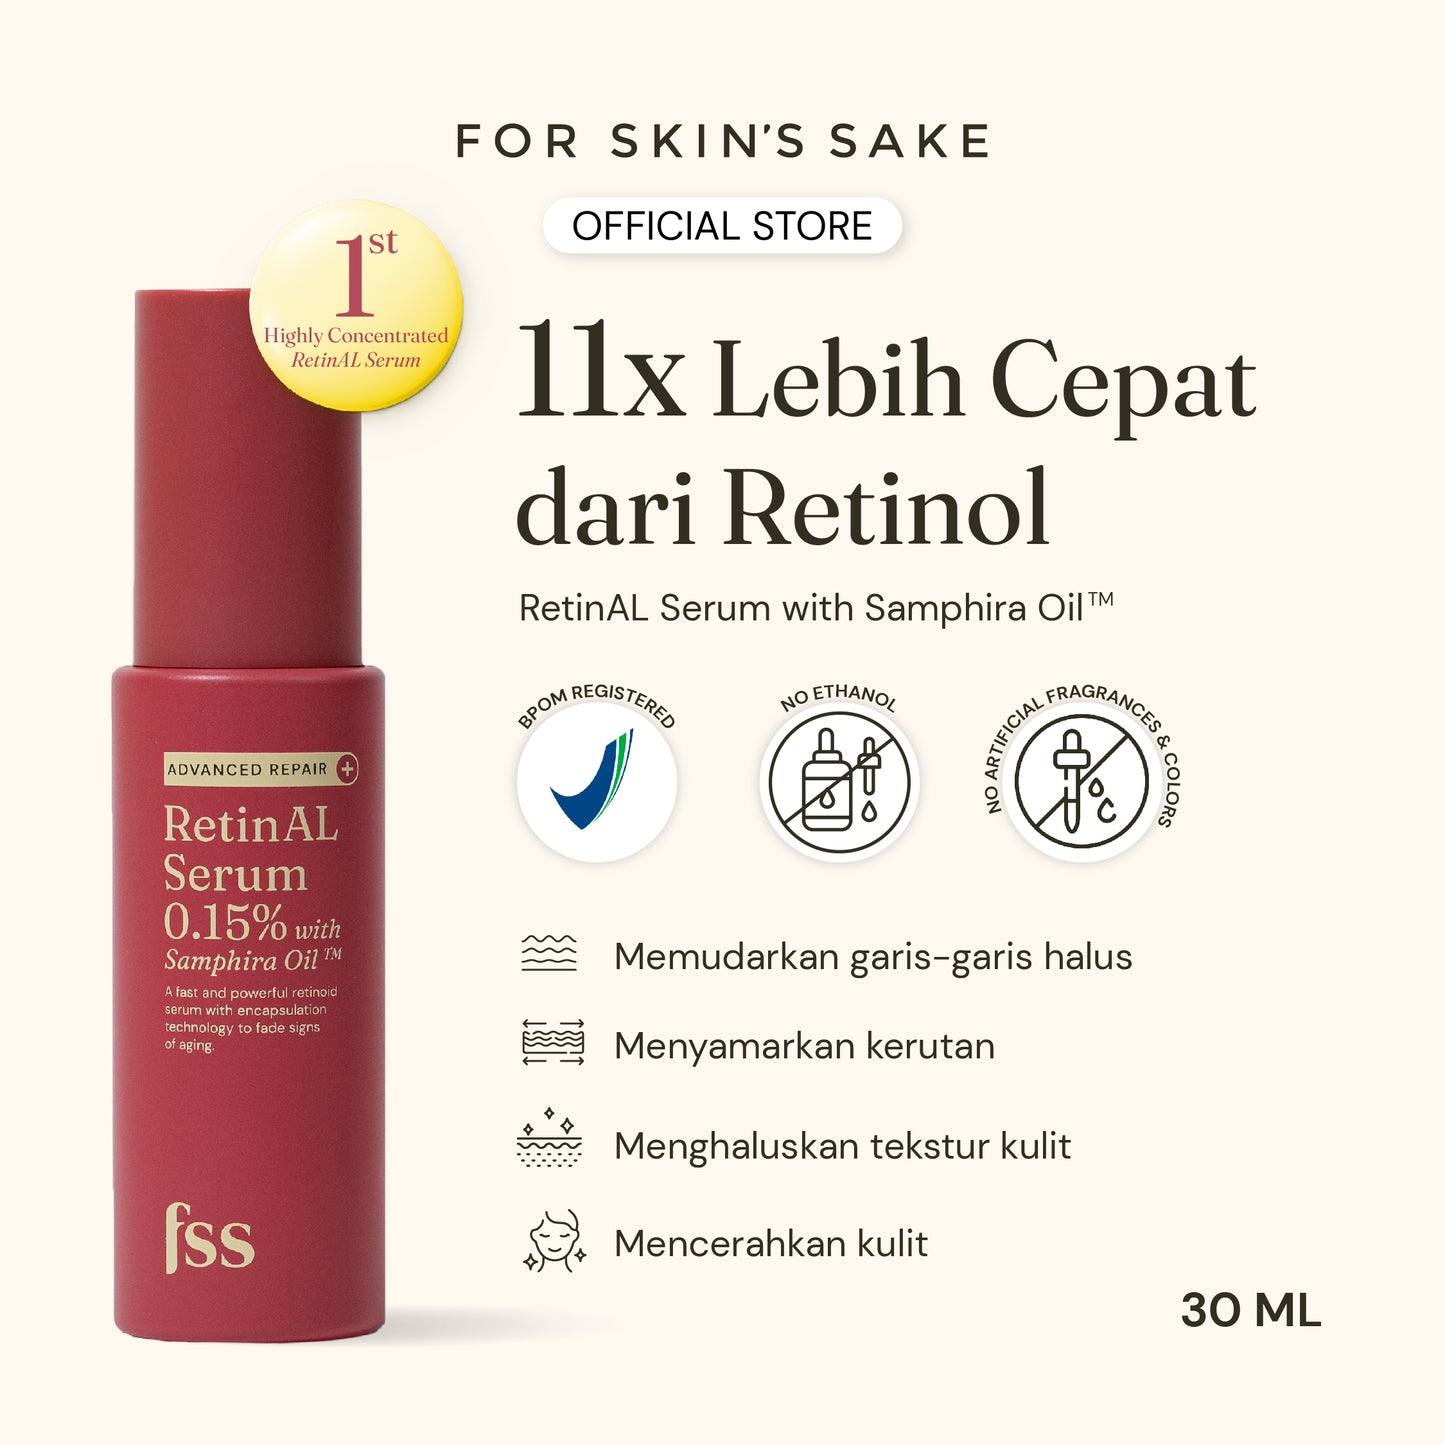 RetinAL Serum 0.15% with Samphira Oil FSS For Skin's Sake